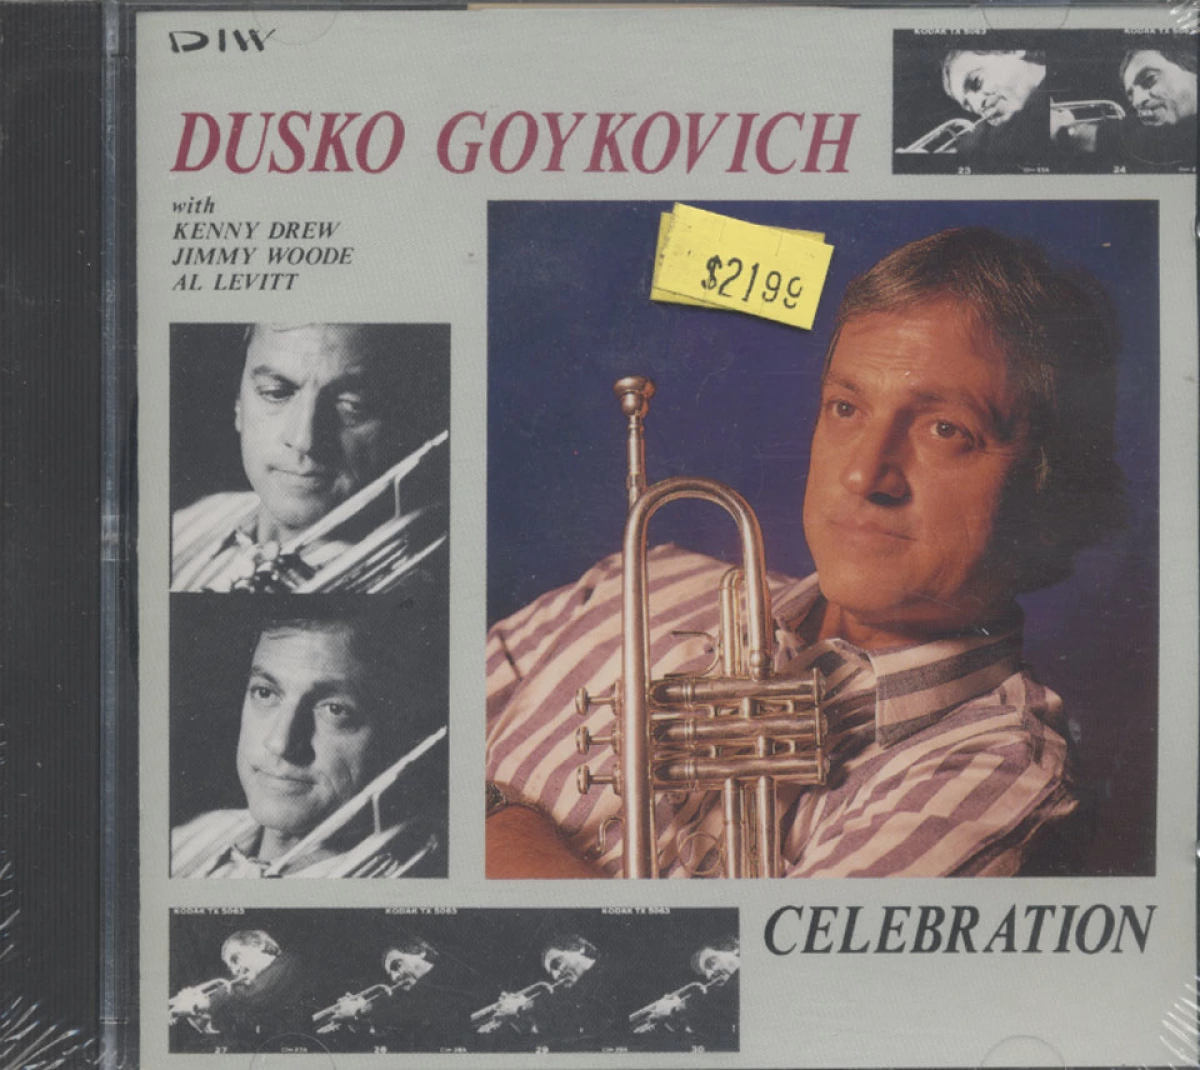 Dusko Goykovich CD, 1987 at Wolfgang's